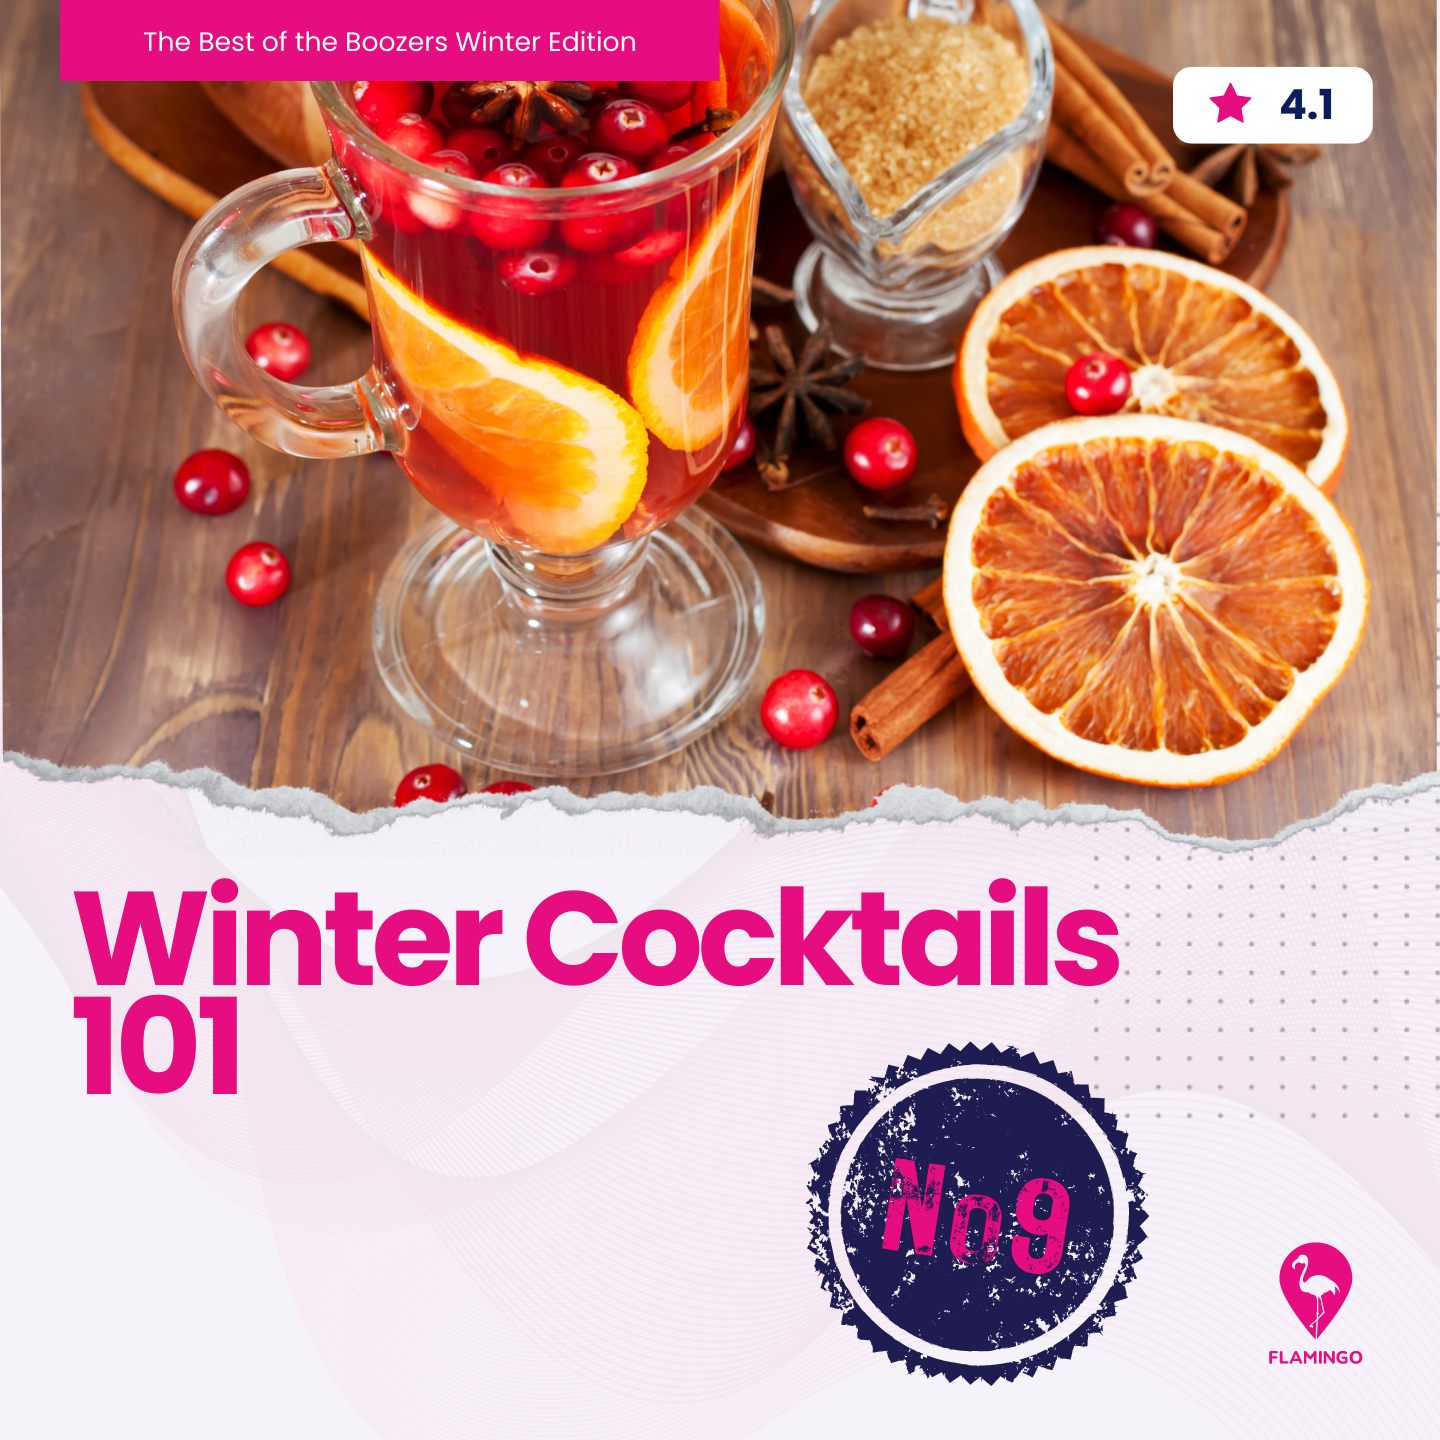 Winter Cocktails | Resident Events for Wintercktails